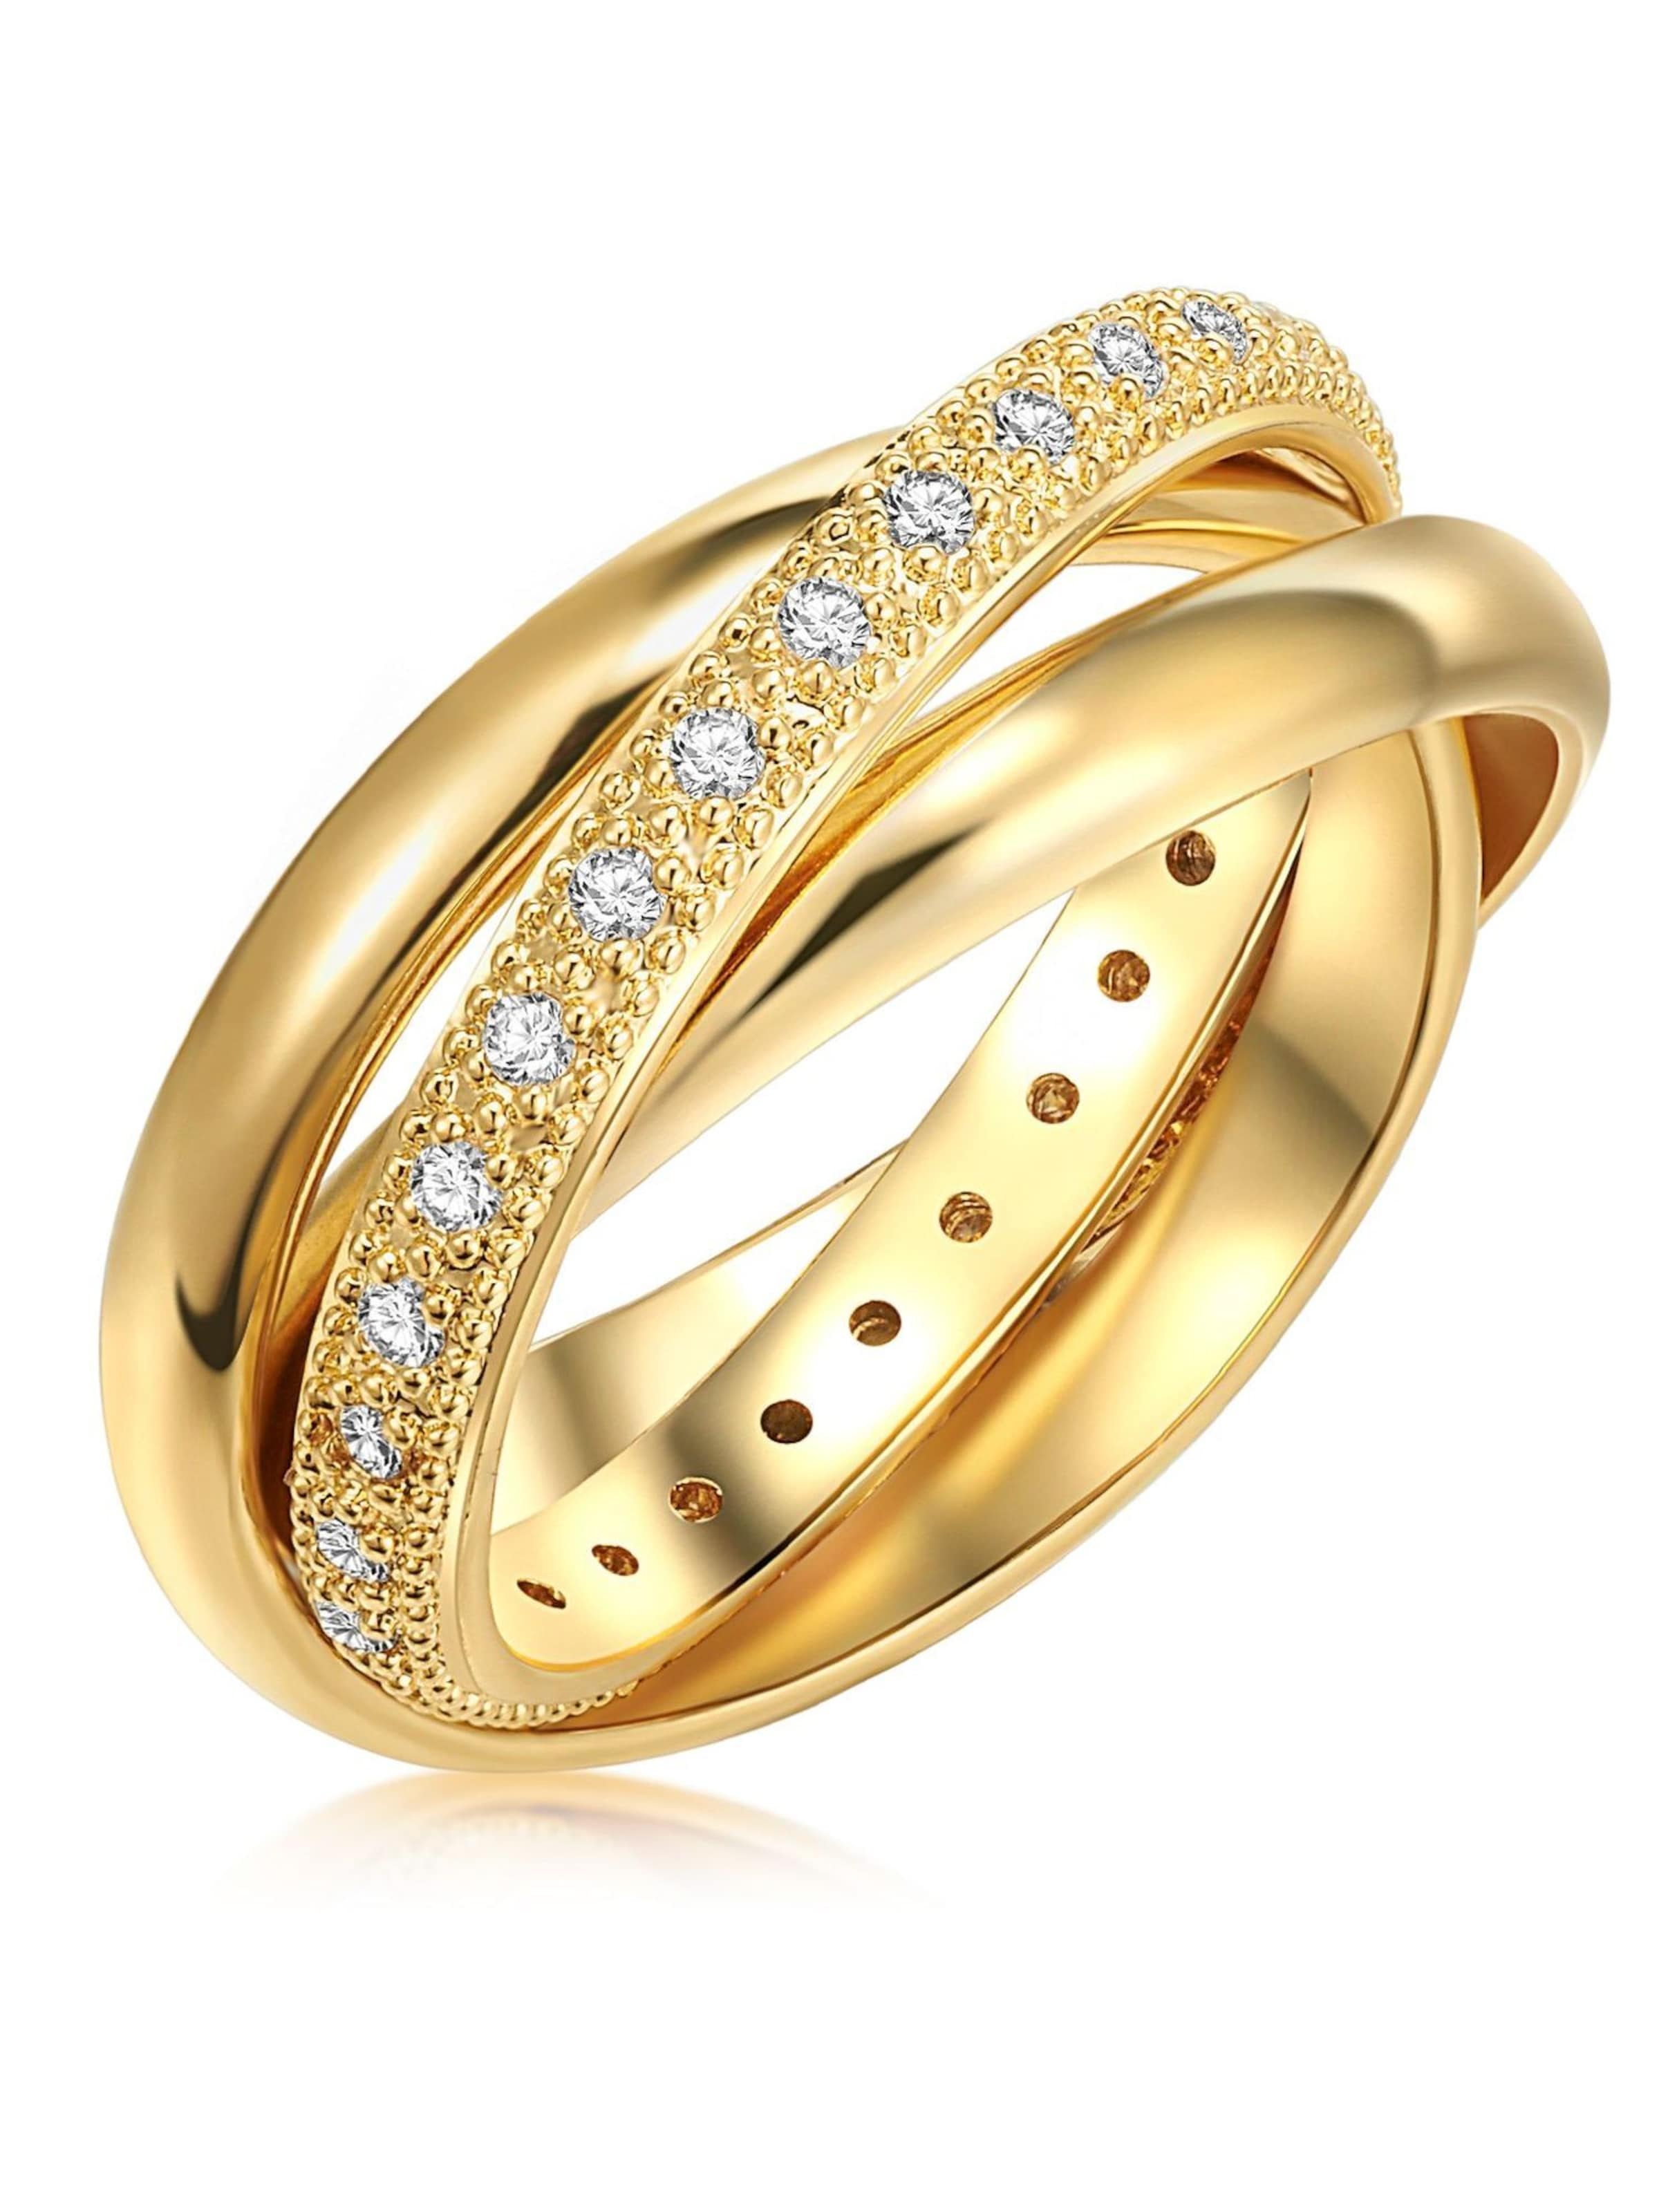 LULU - Solid Gold Ring, White Diamonds | Danai Giannelli